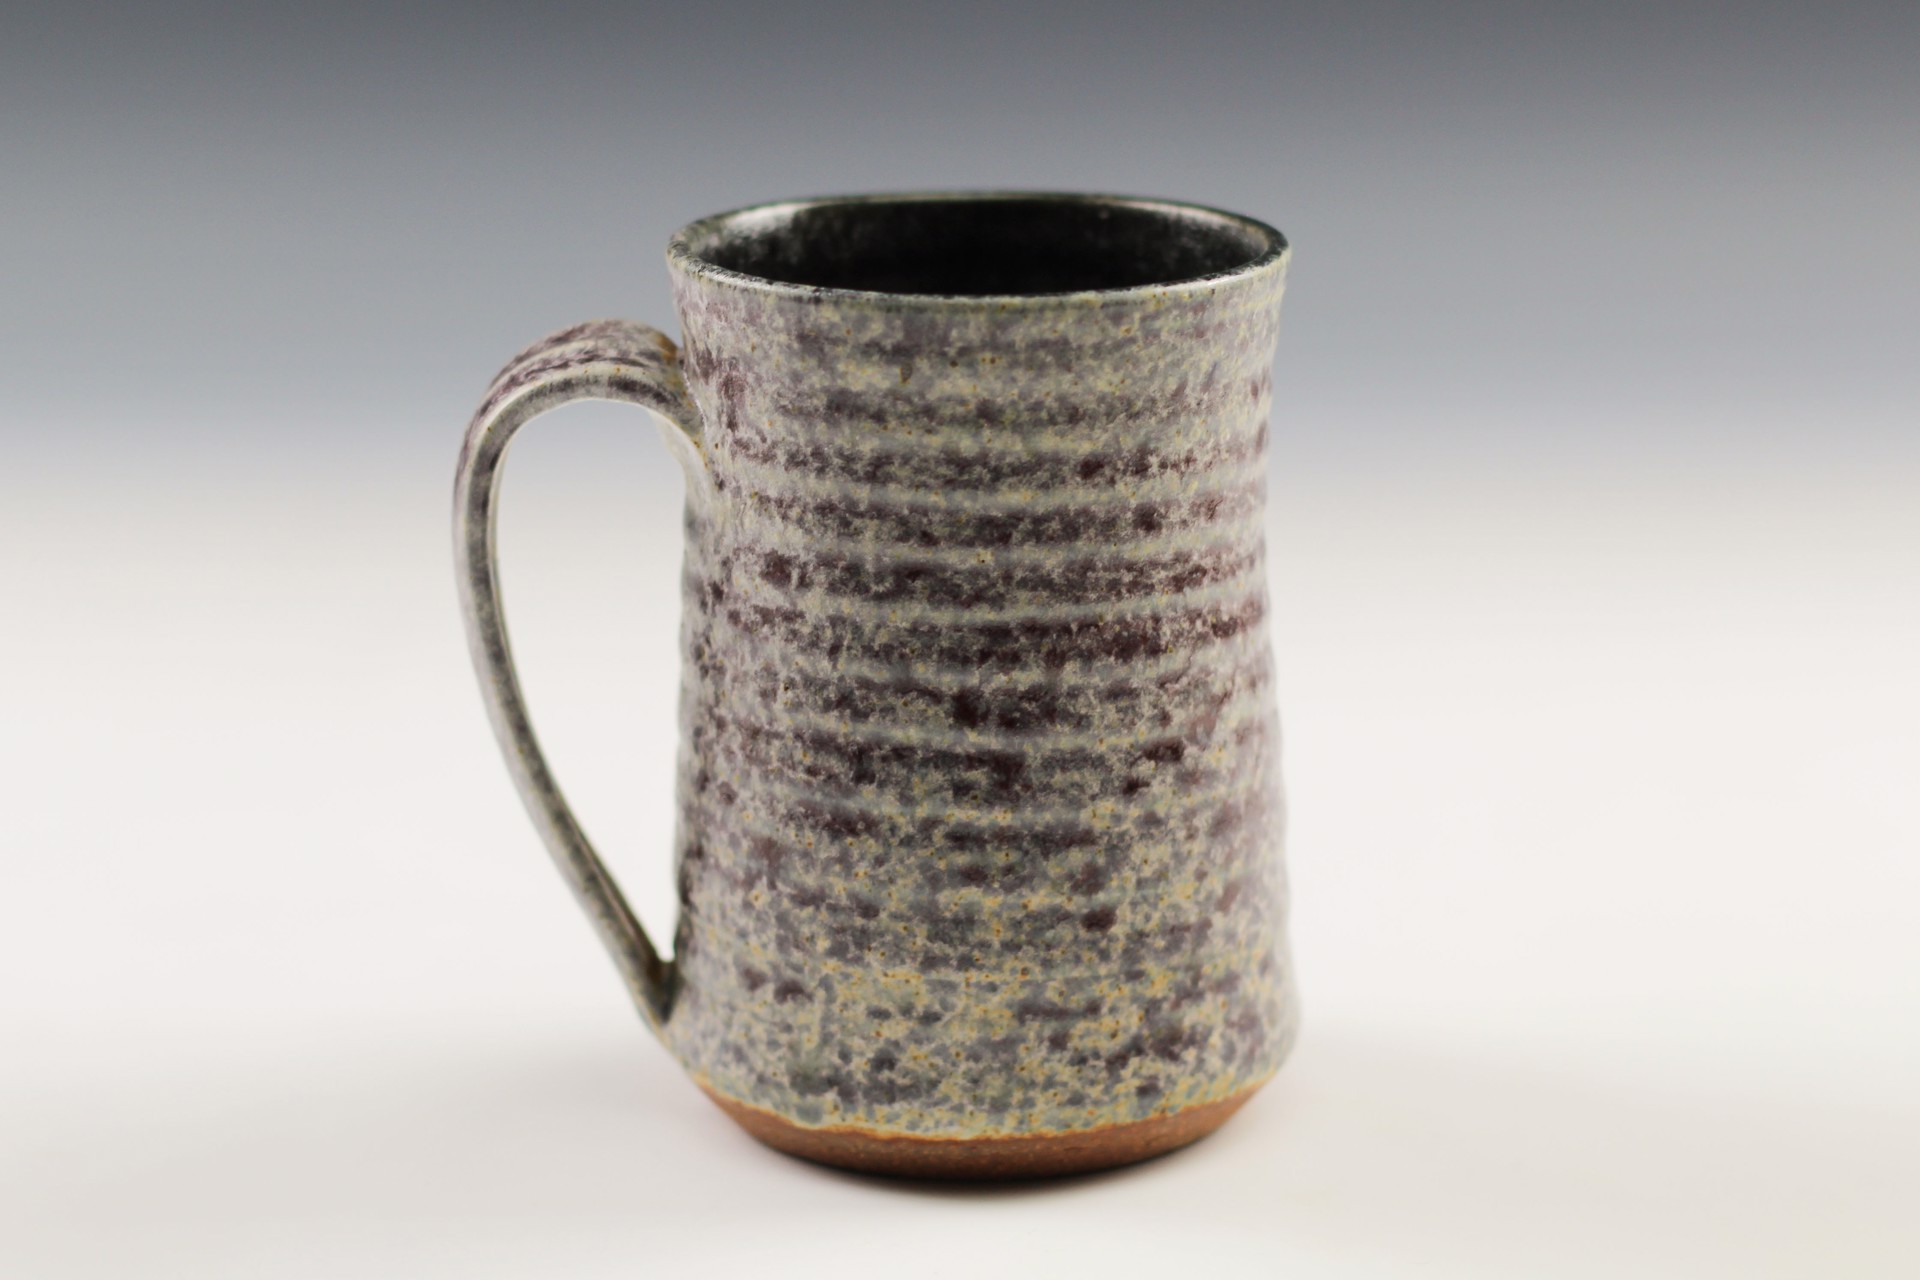 Mug by Winthrop Byers